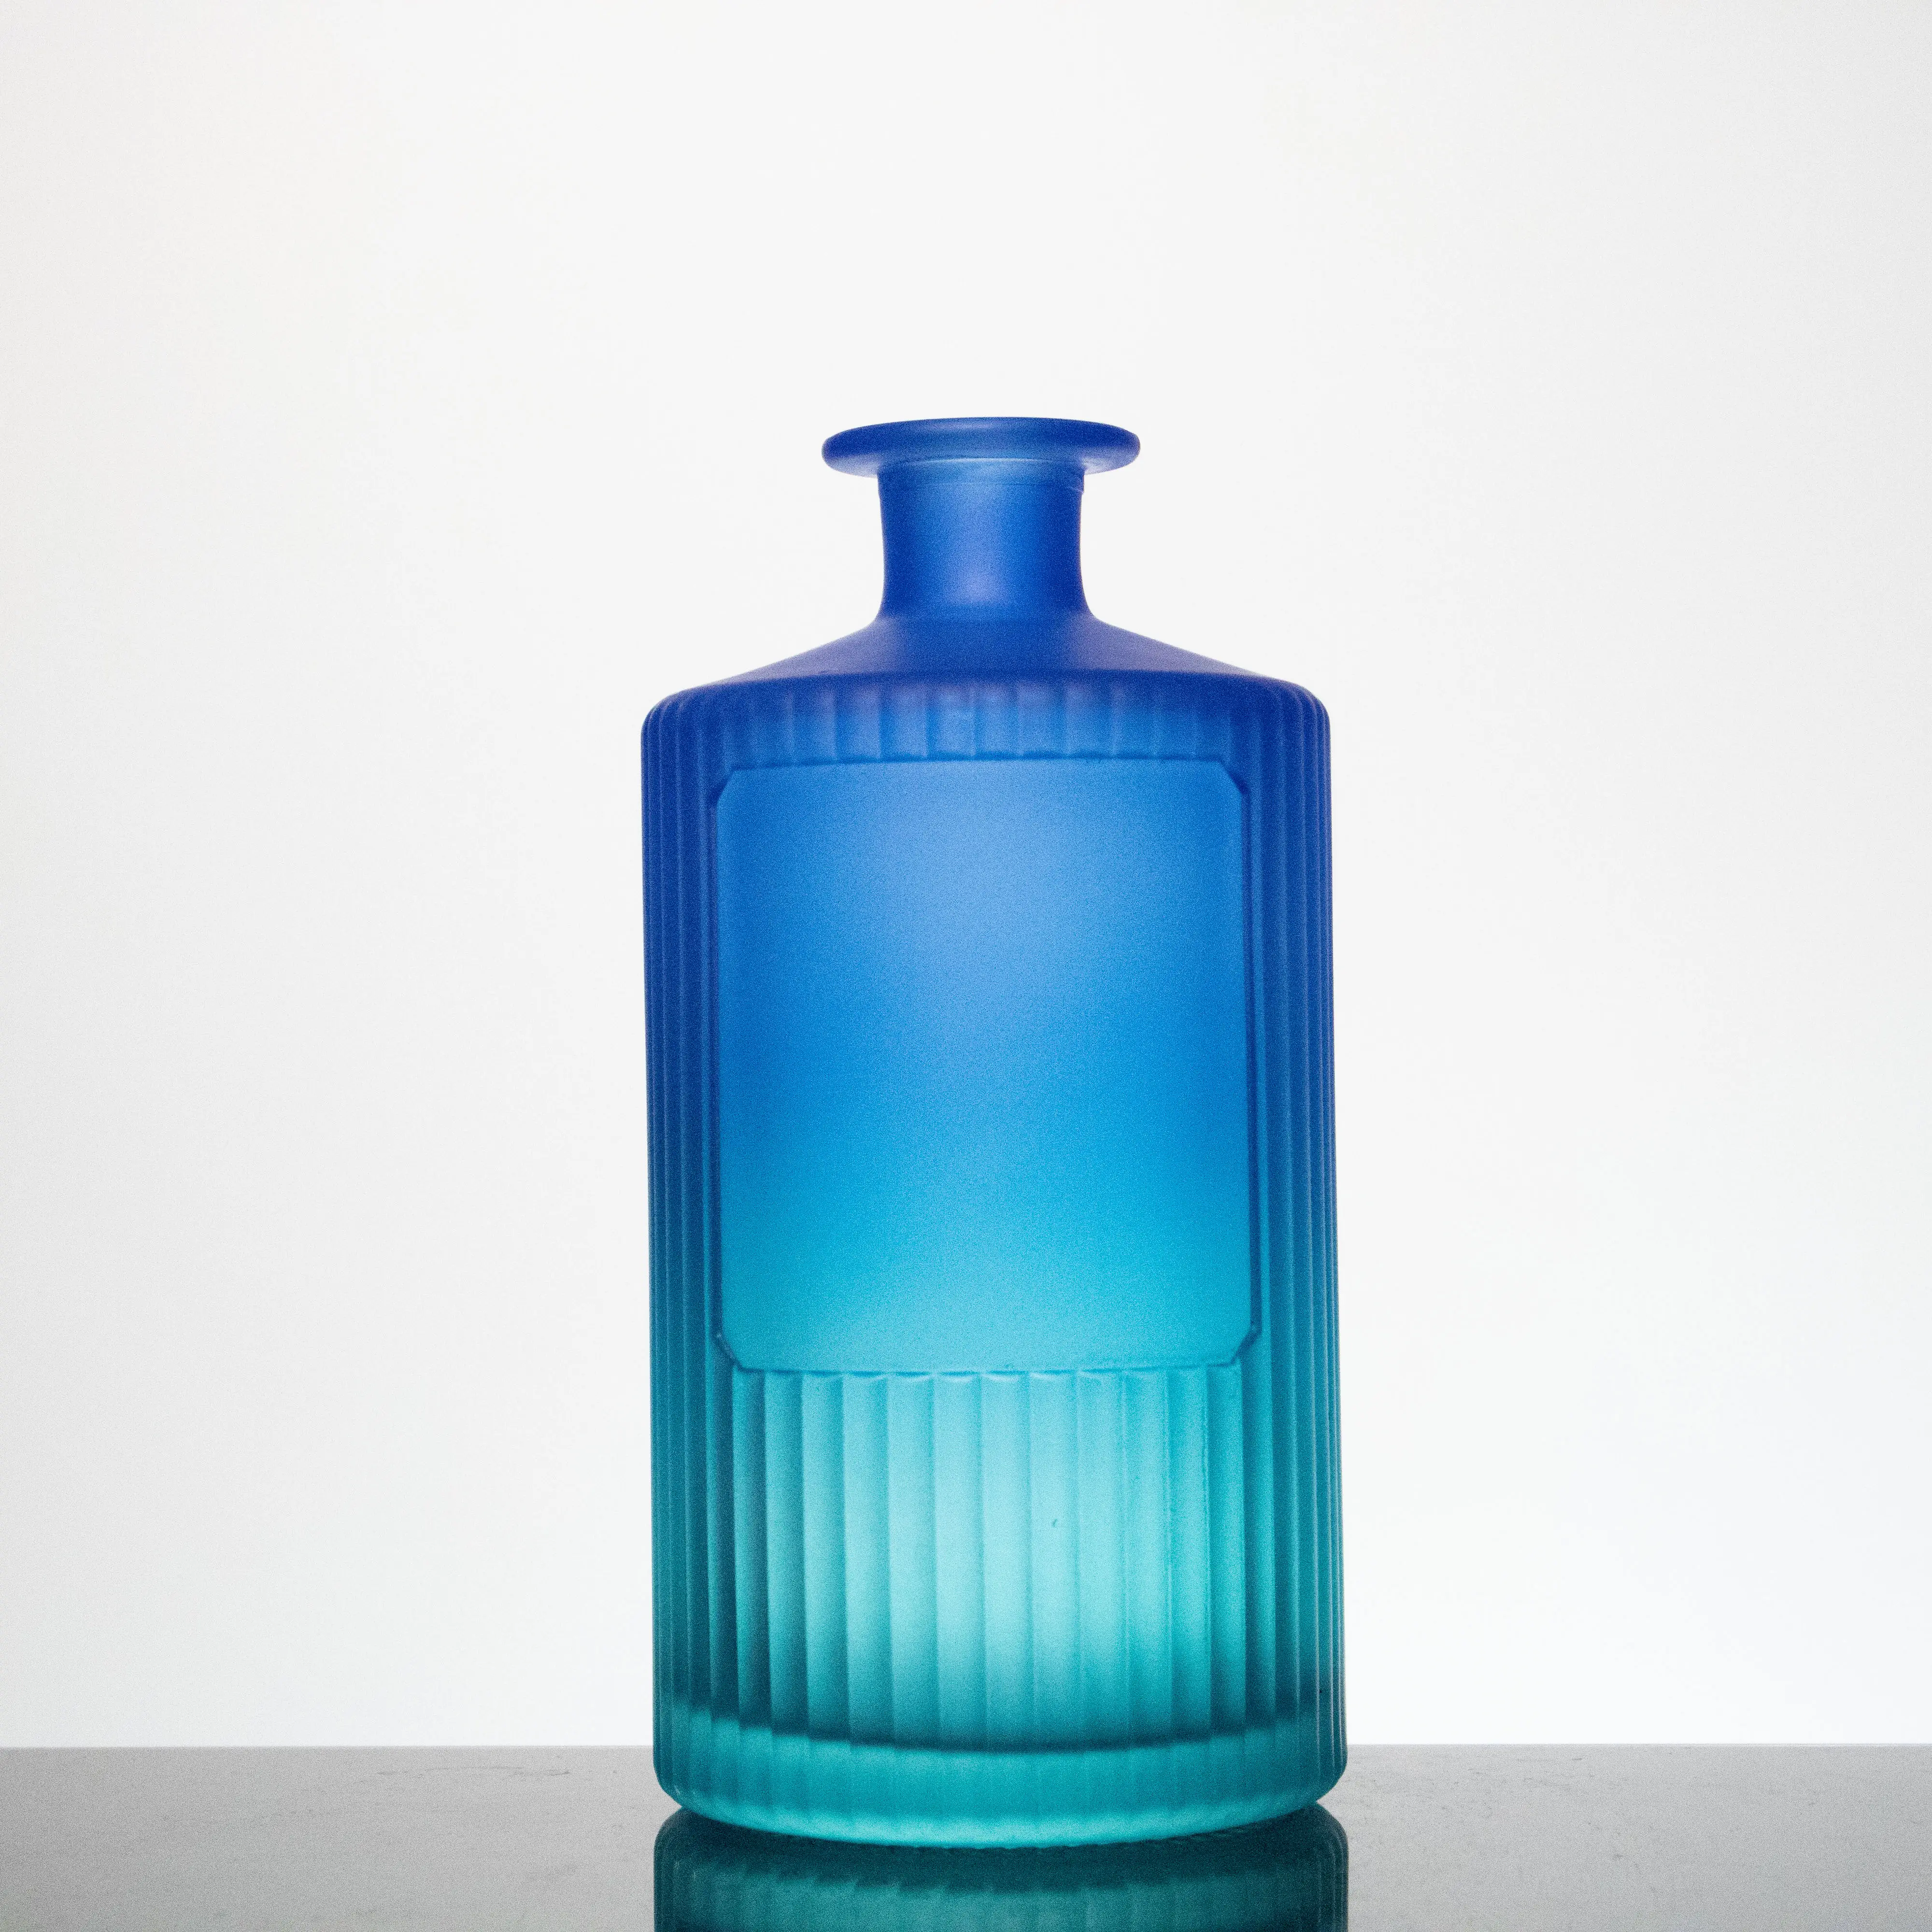 Unique Gradient Blue Purple Color Streamline Design 700ml Liquor Glass Bottle for Whiskey Vodka Tequila Gin with Cork